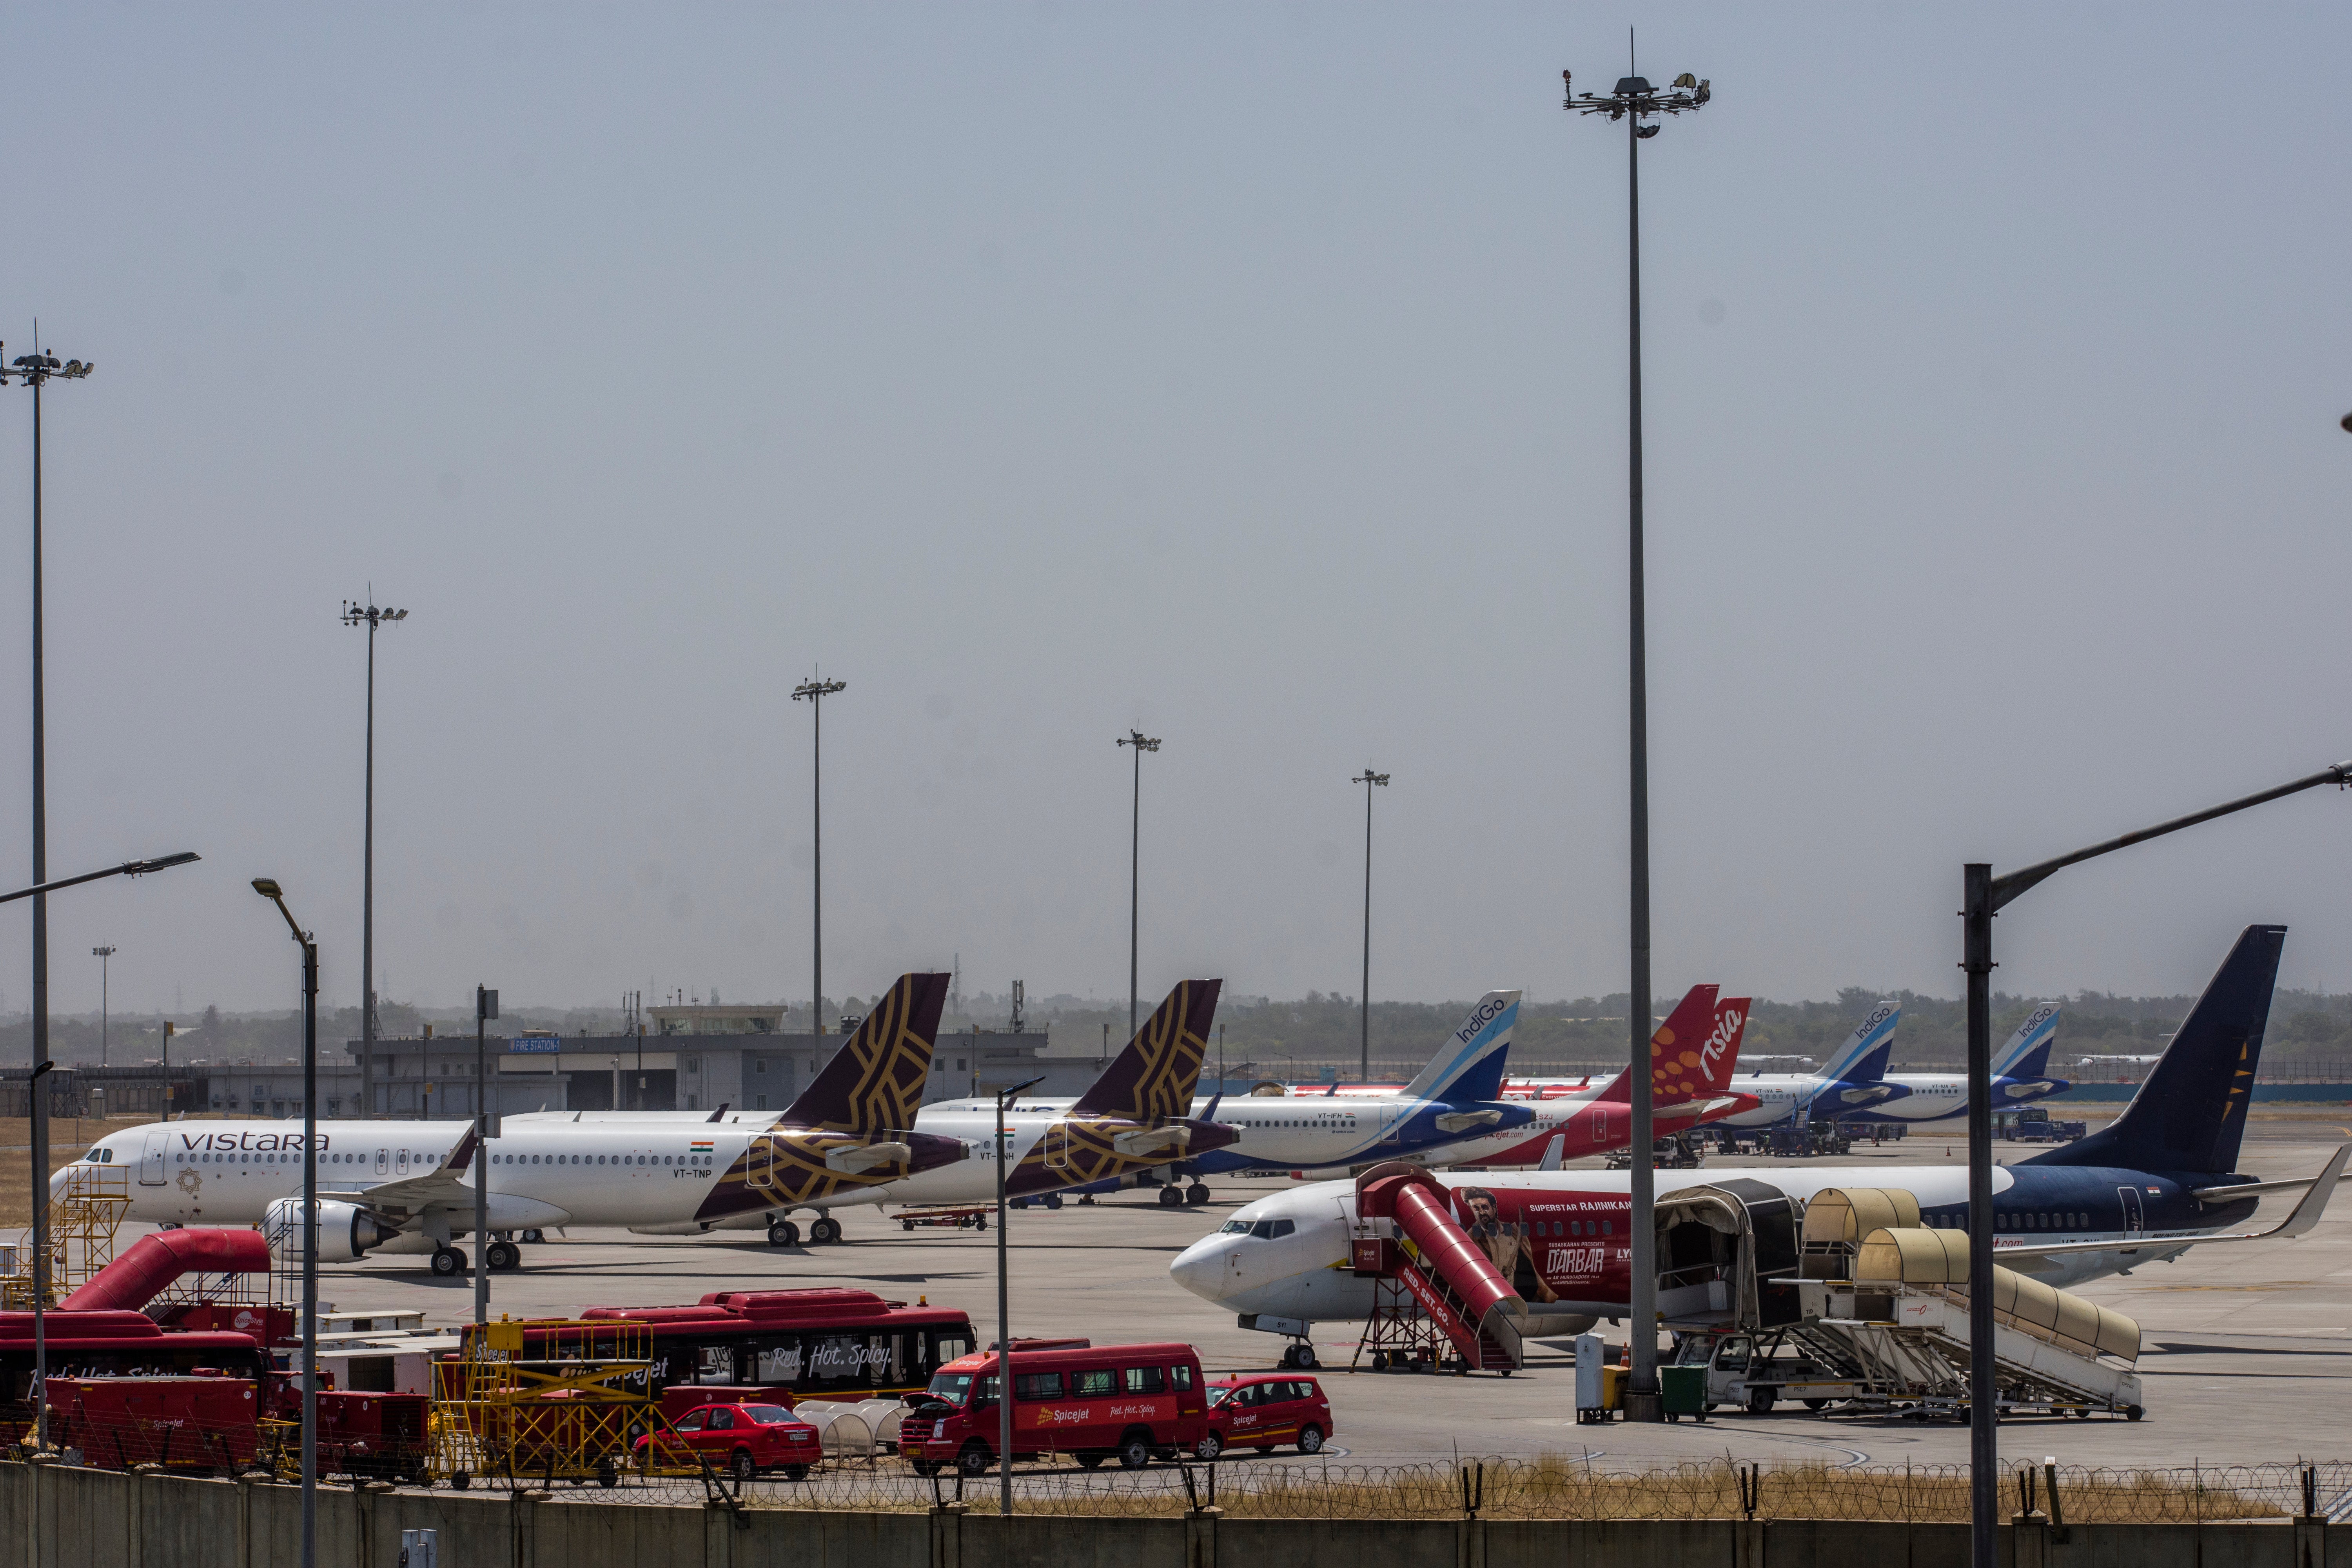 Representational image of aircrafts at an airport runway in India